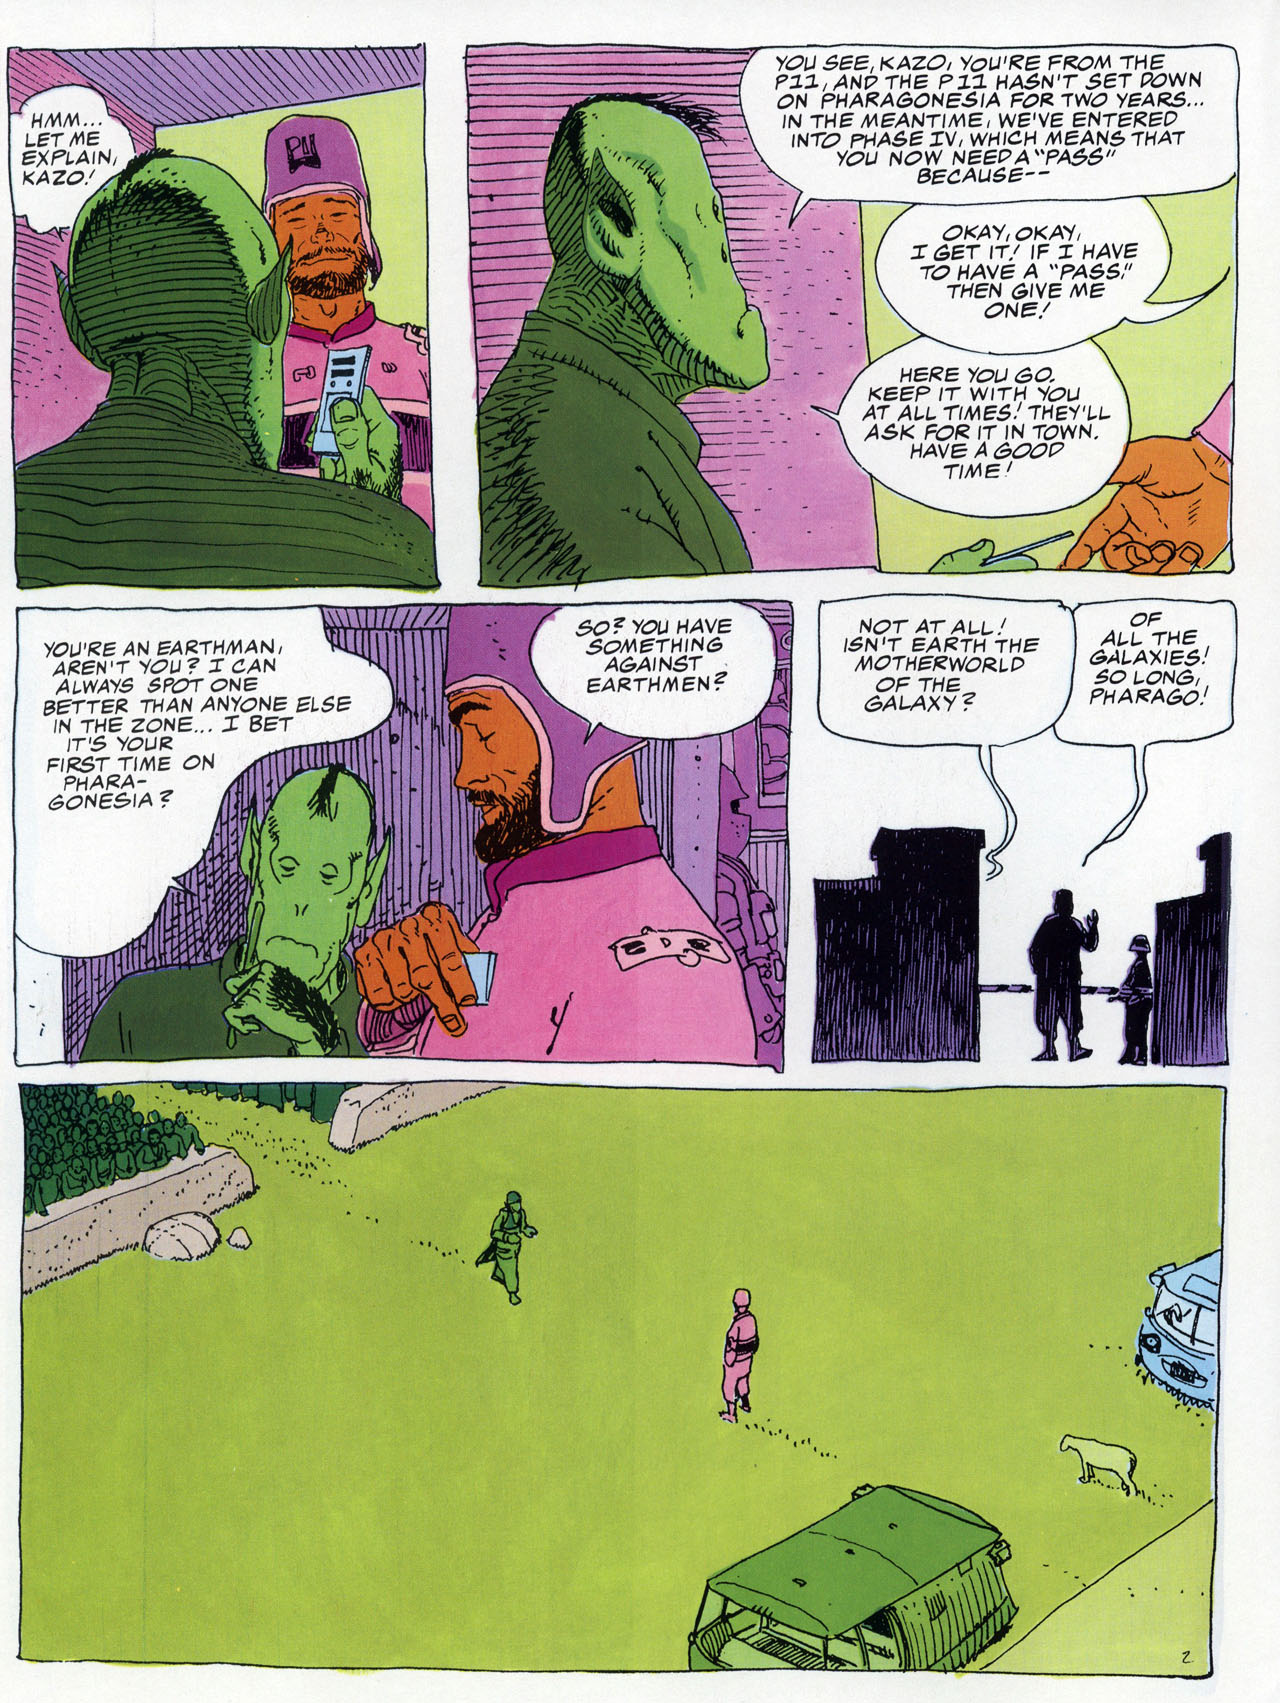 Read online Epic Graphic Novel: Moebius comic -  Issue # TPB 6 - 7